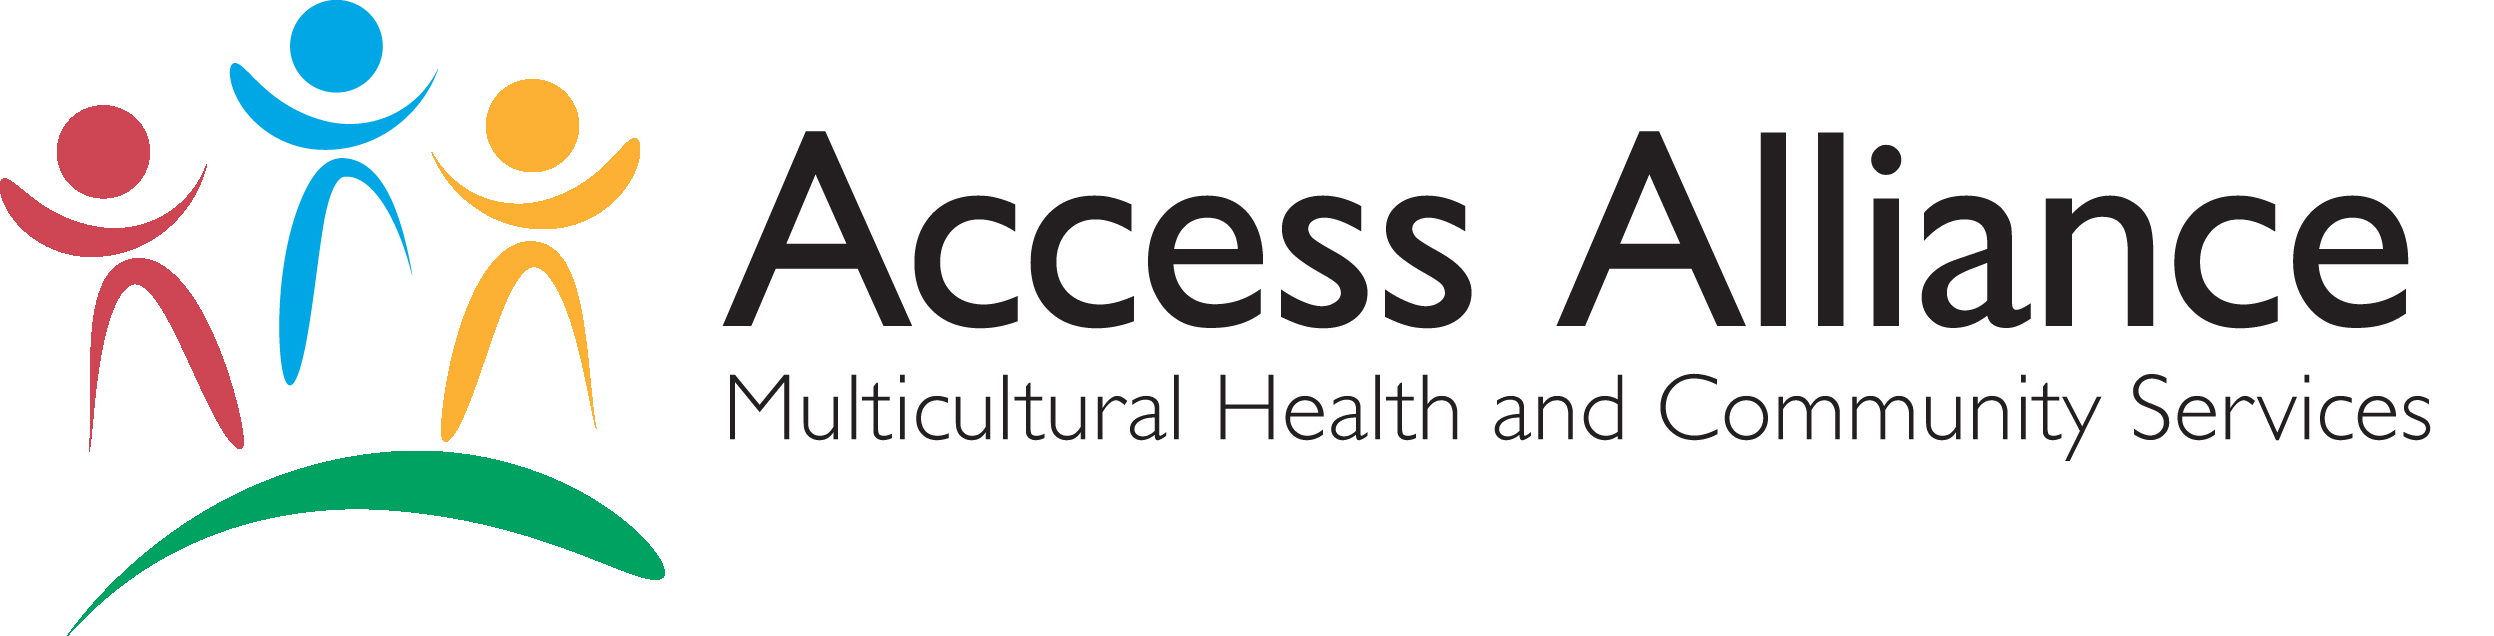 Access Alliance